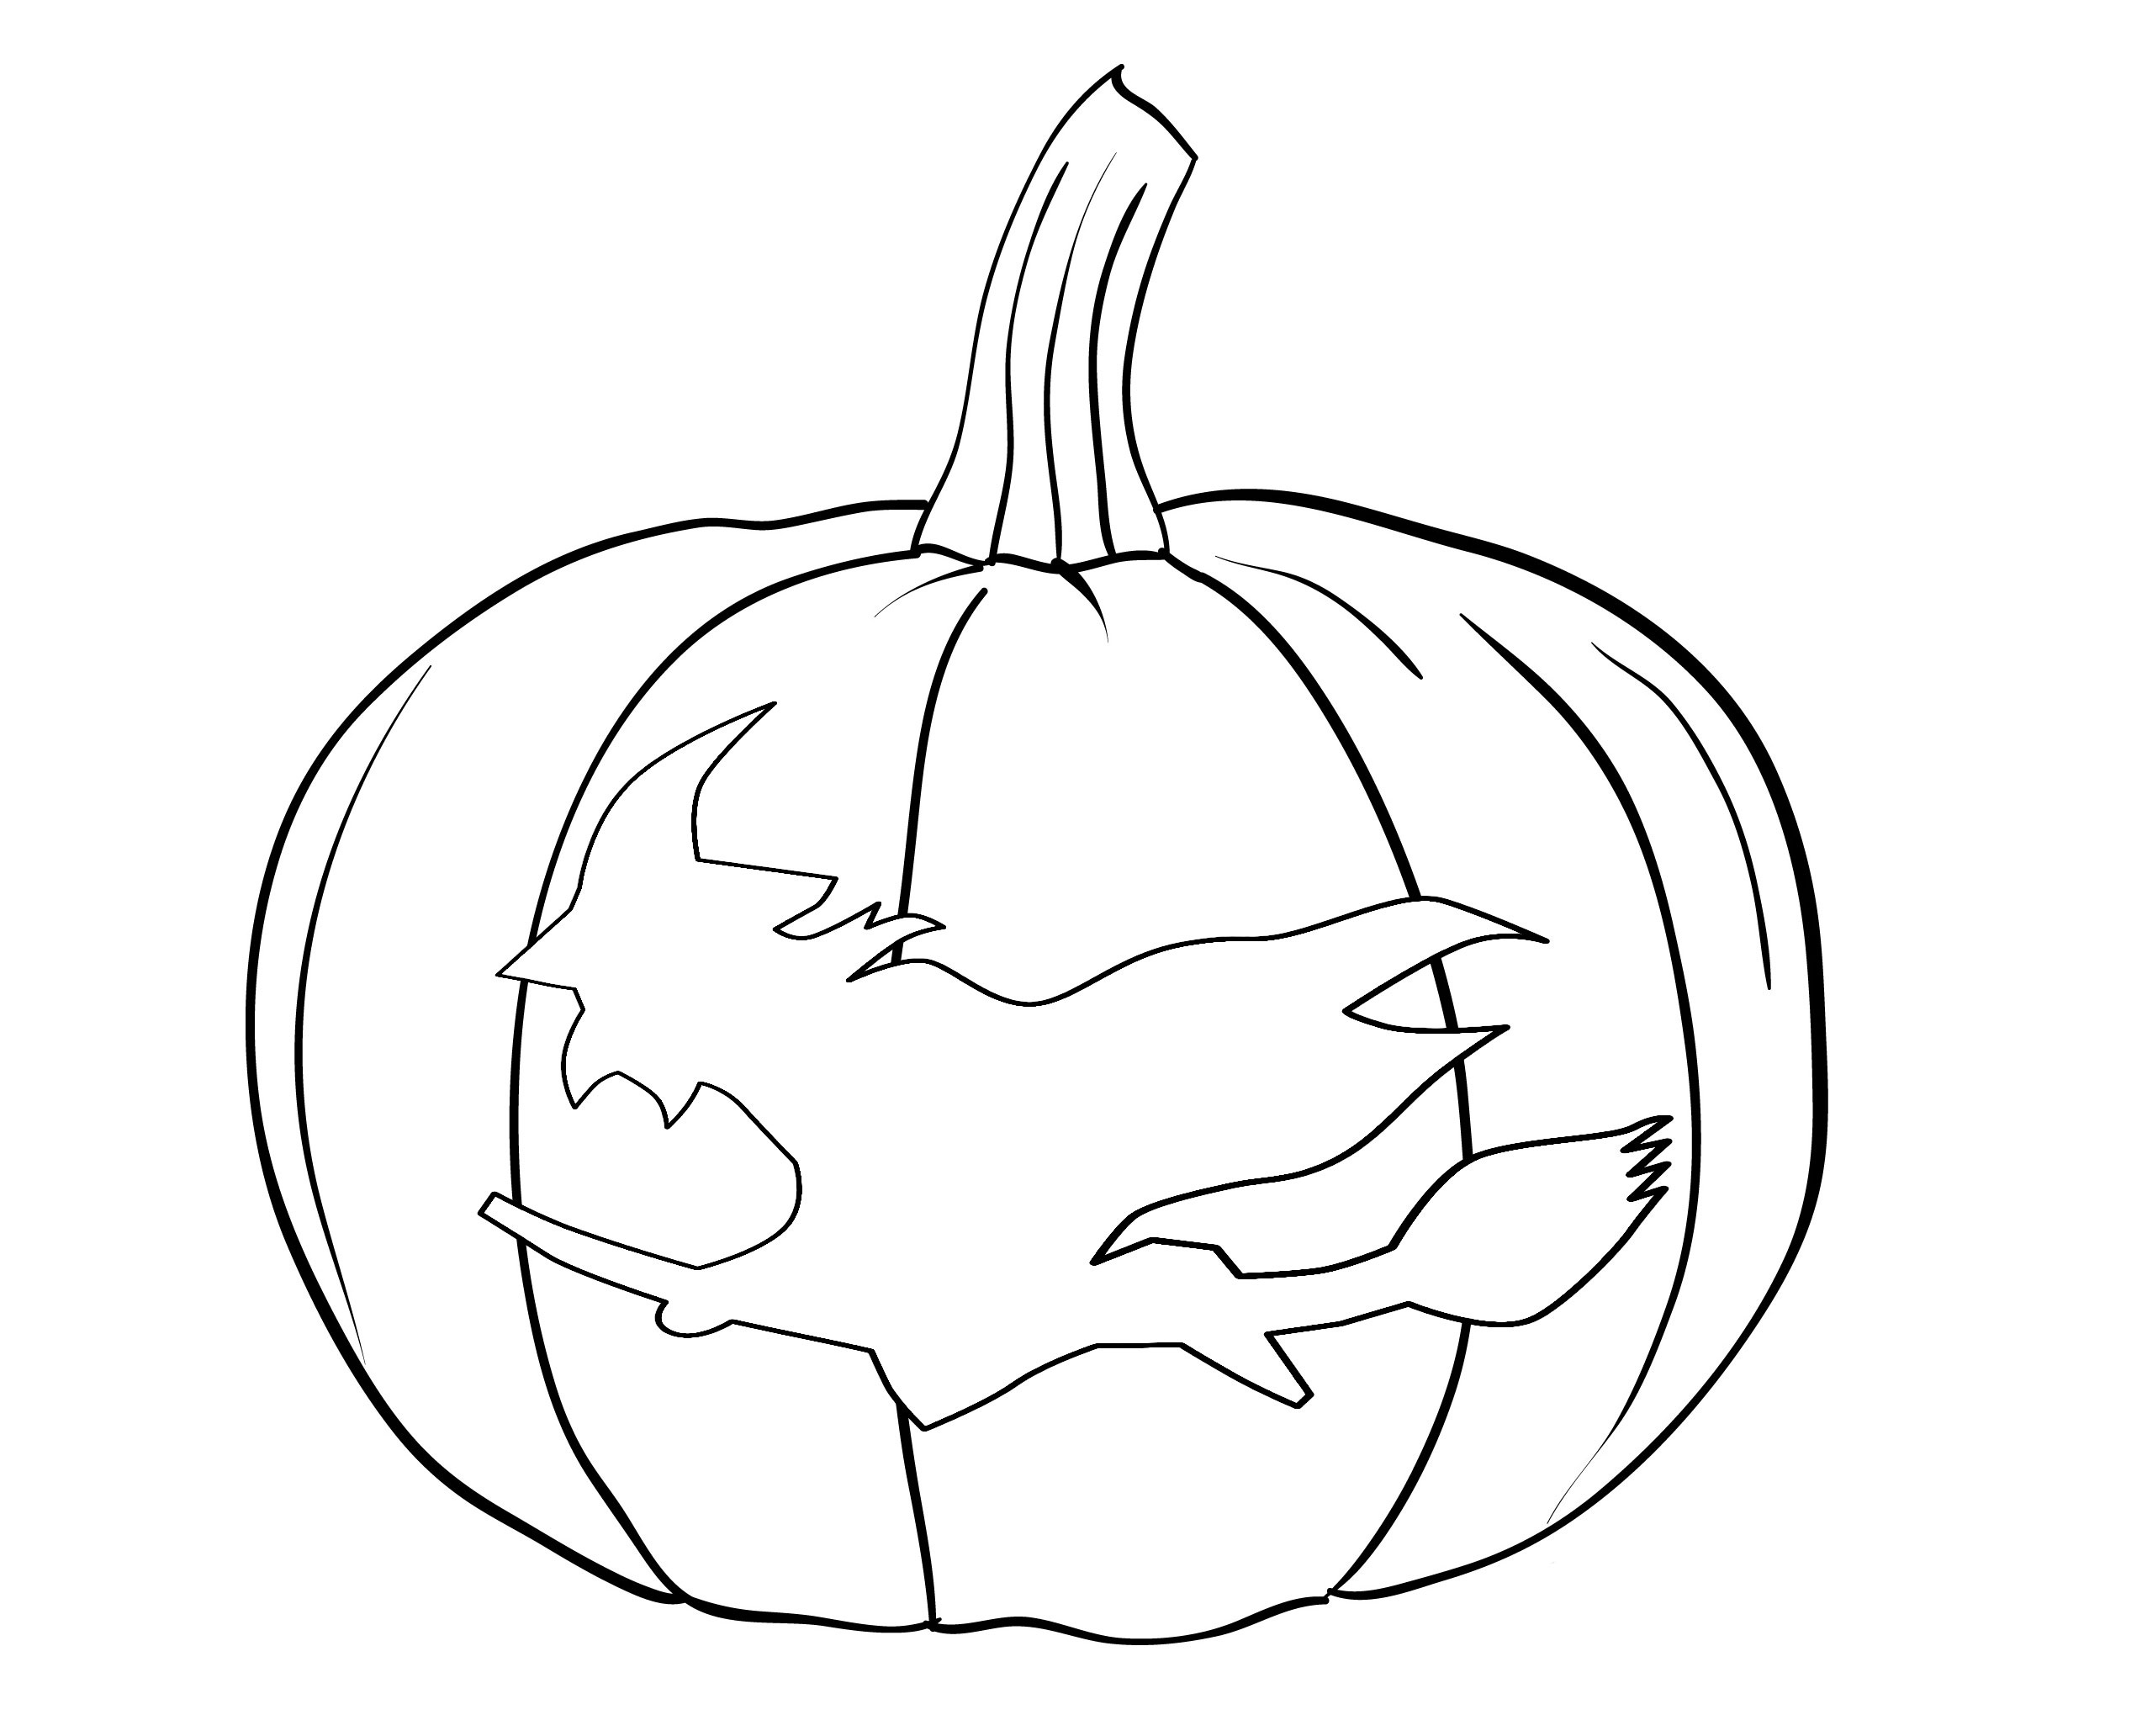 Cute pumpkin coloring page